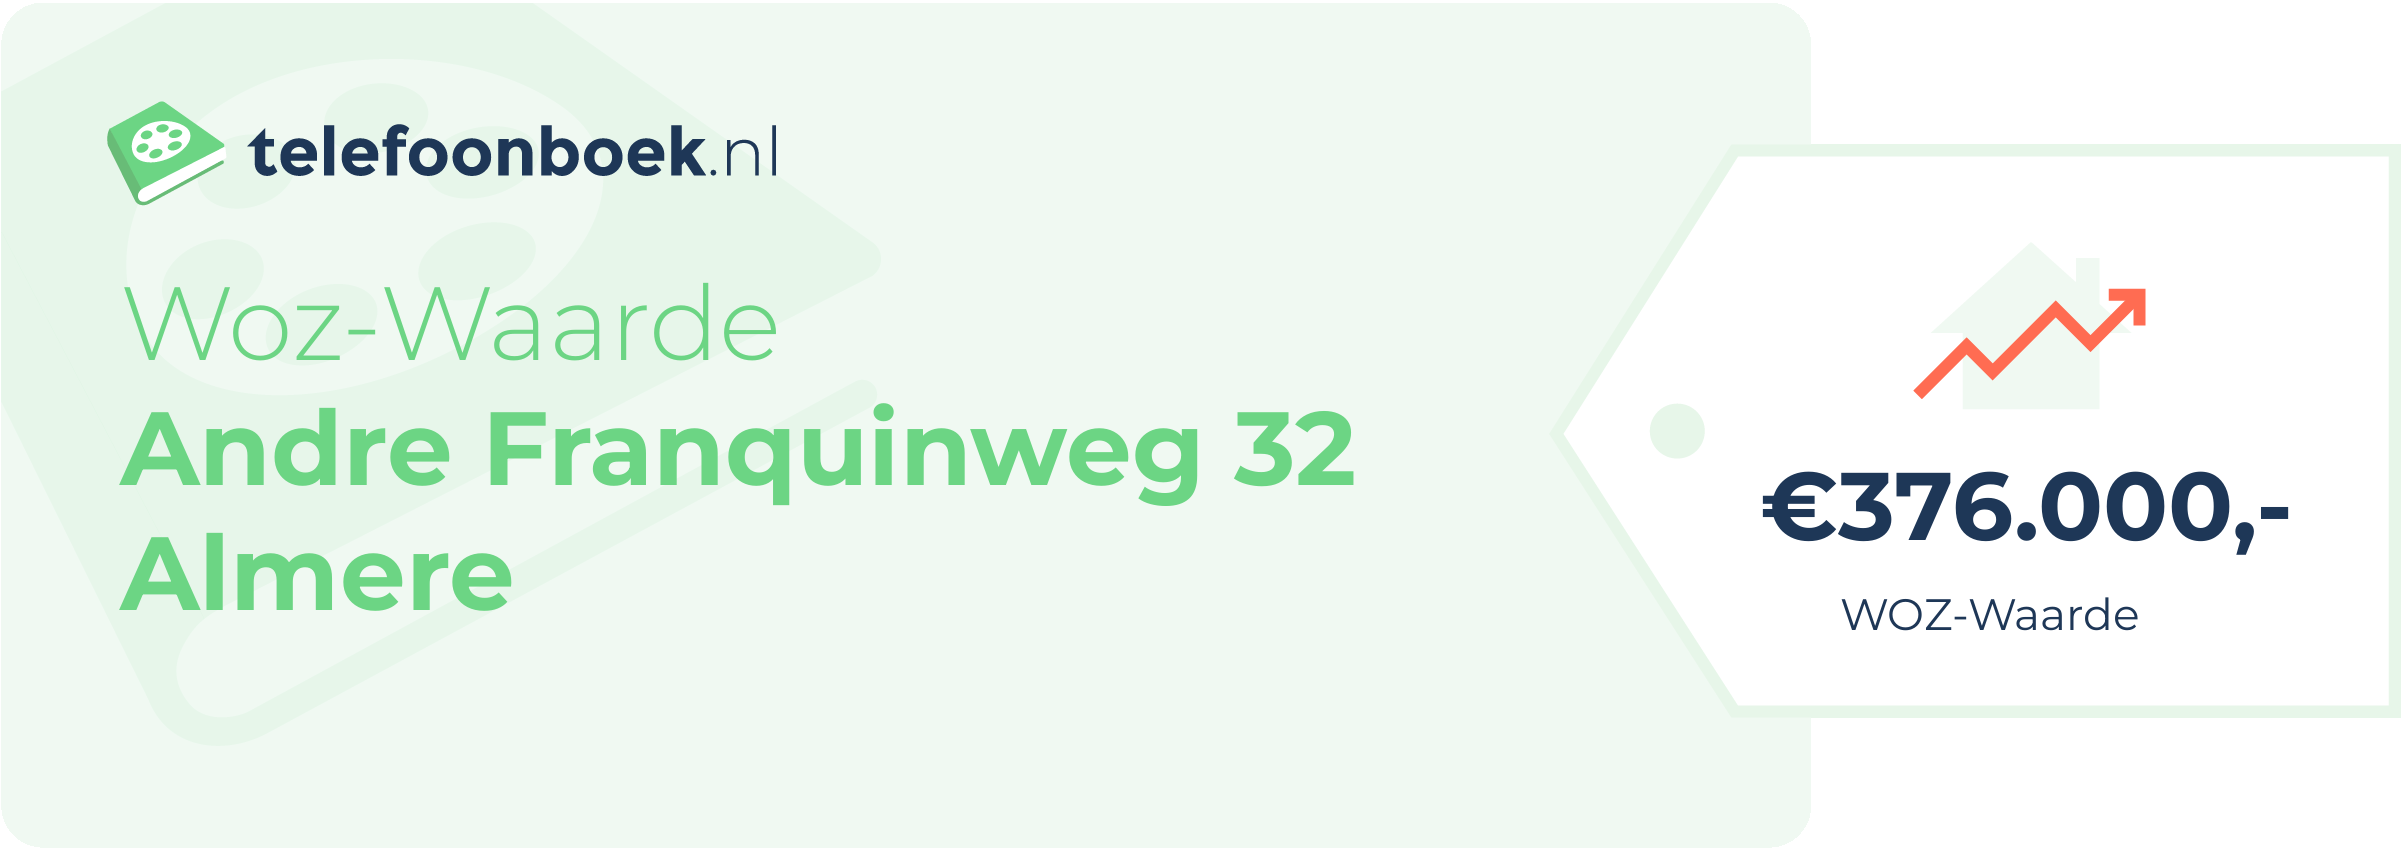 WOZ-waarde Andre Franquinweg 32 Almere